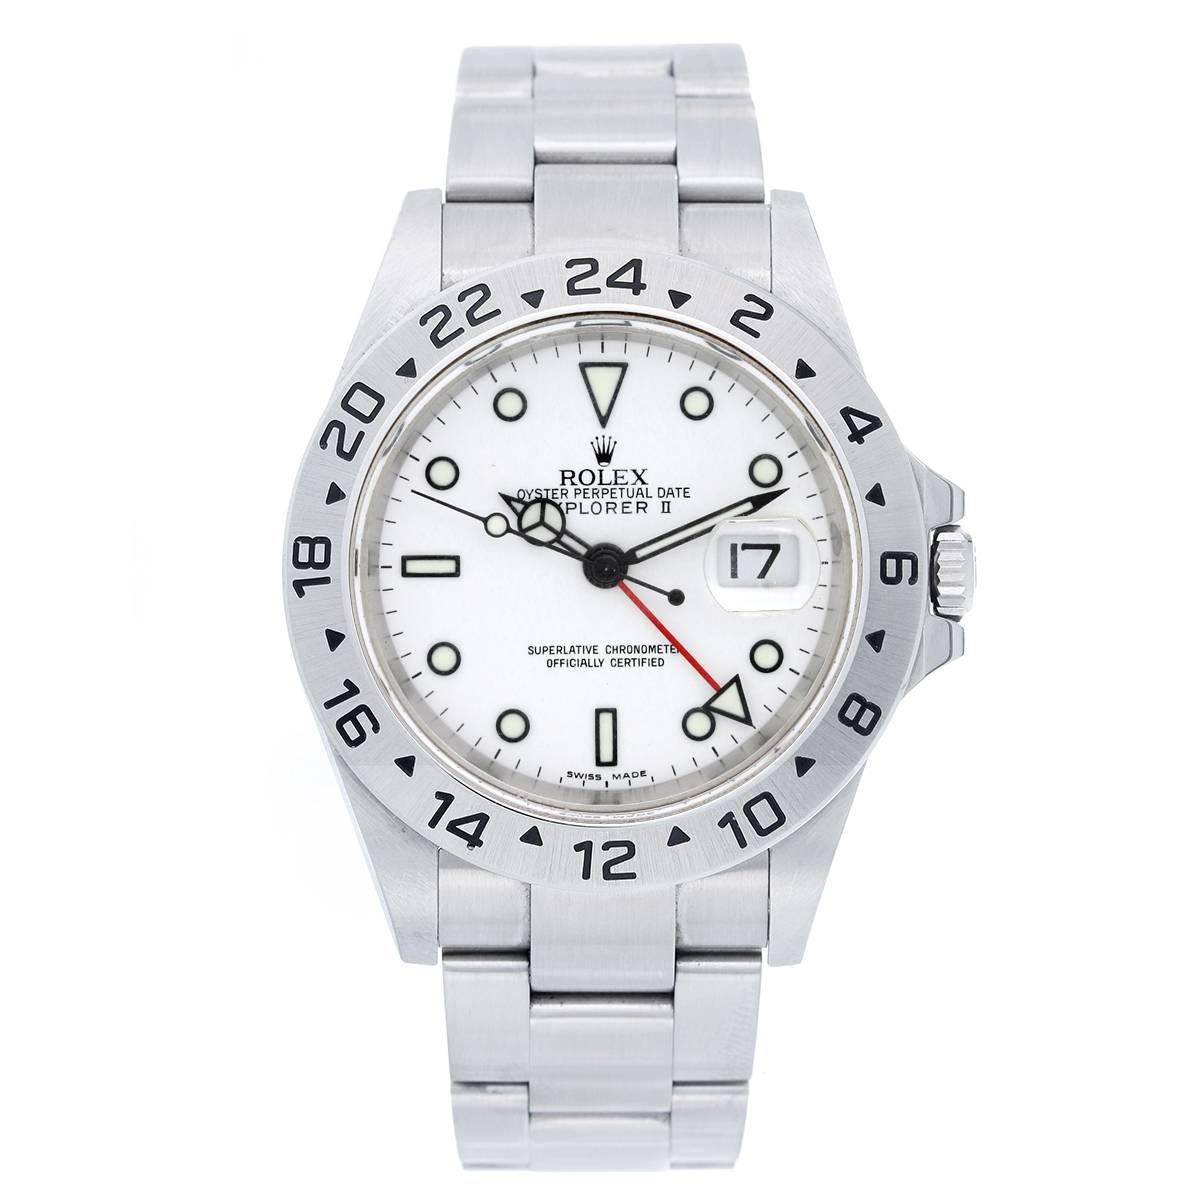 Rolex Stainless Steel Explorer II Automatic Wristwatch Ref 16570